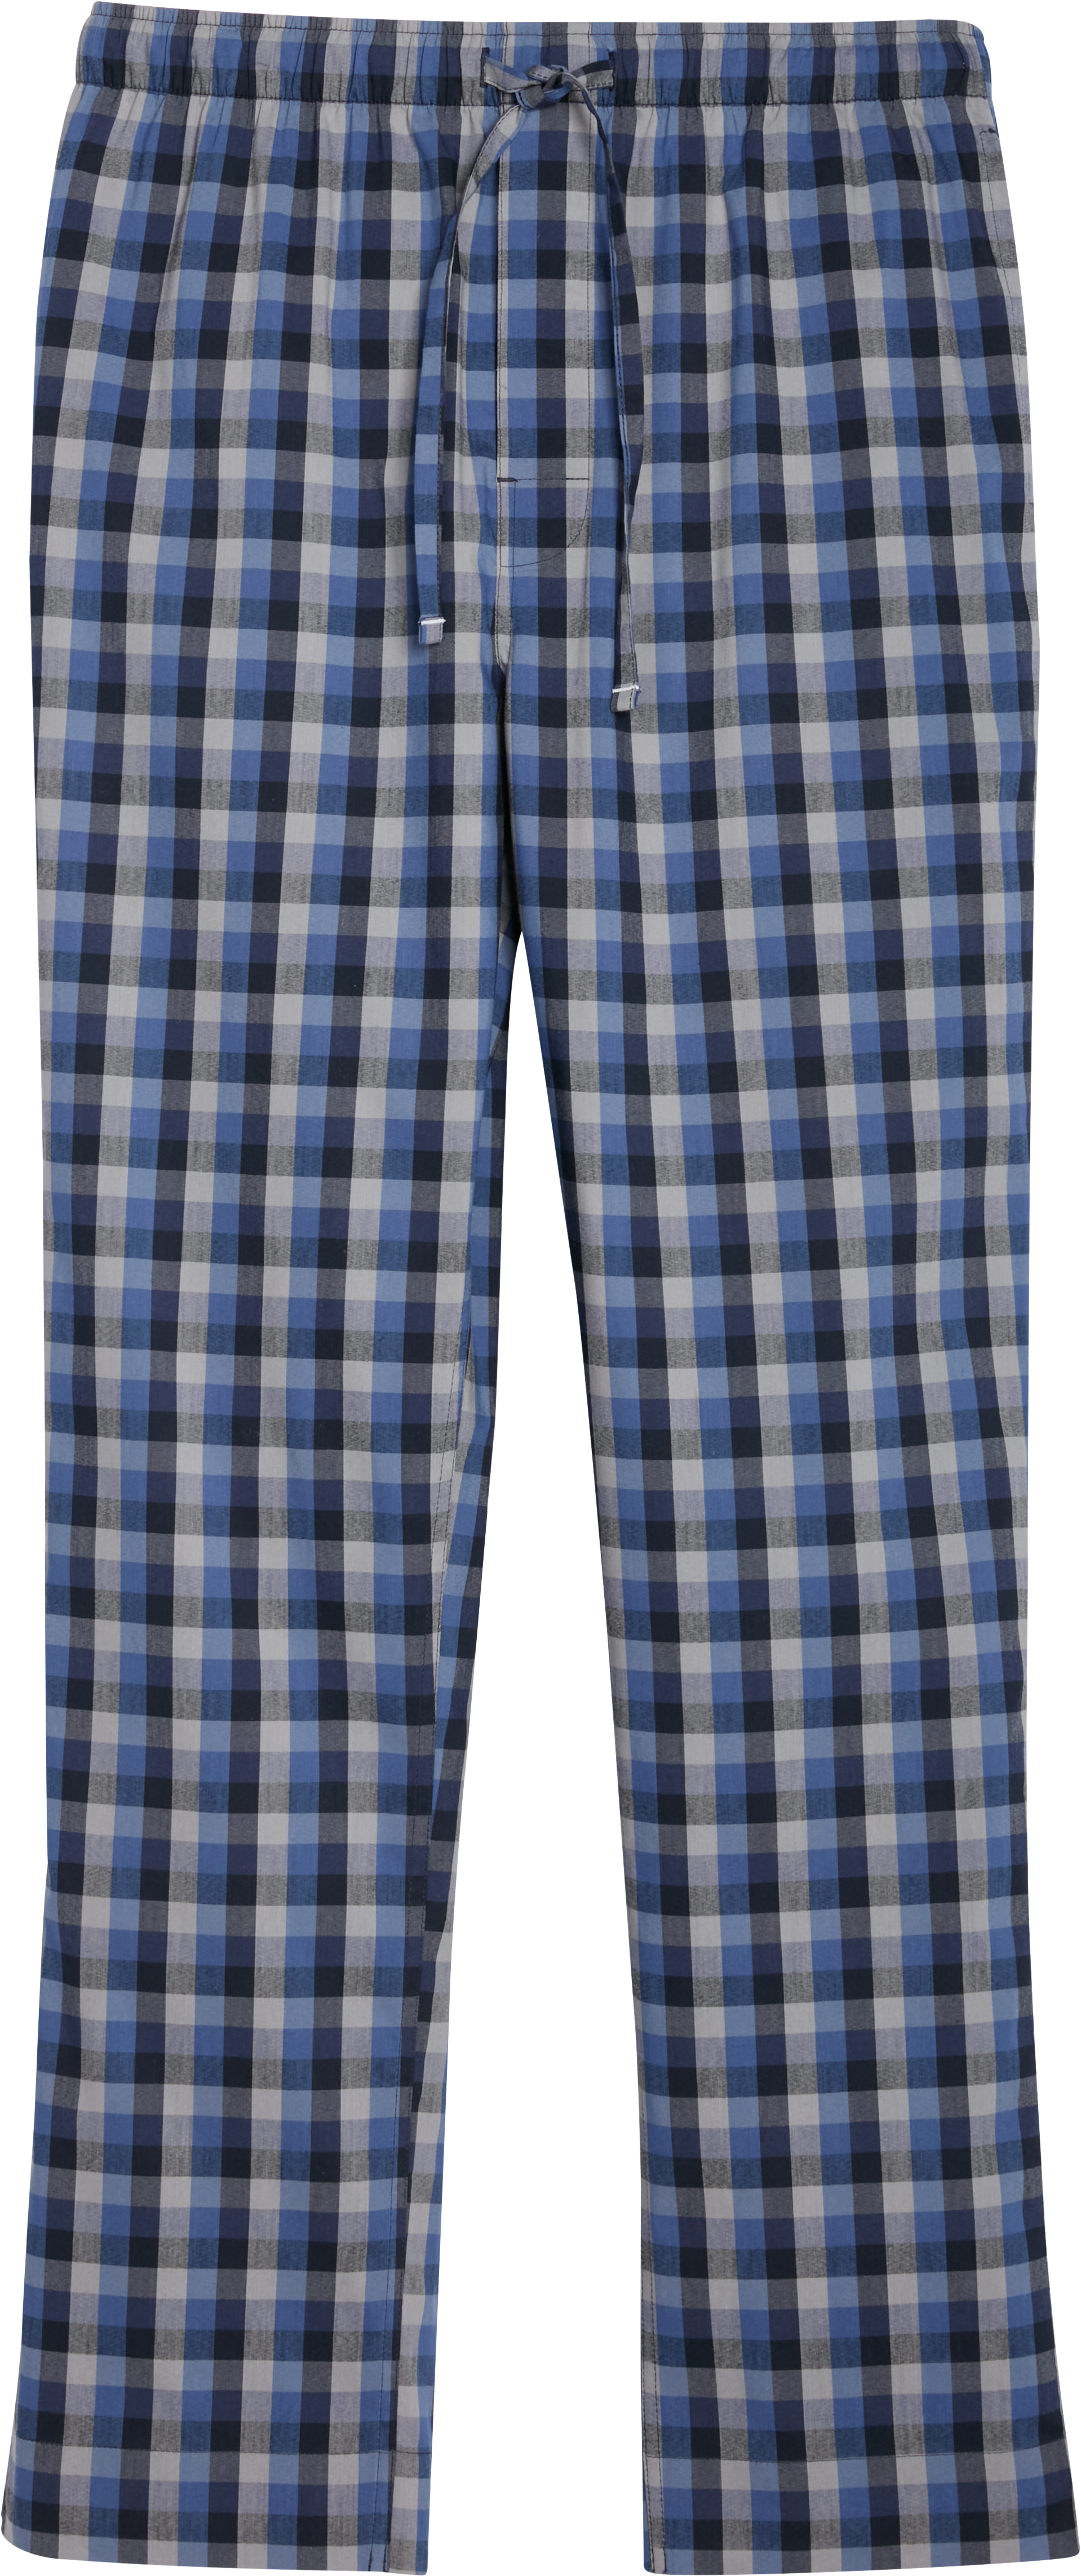 Michael Strahan Pajama Pants, Royal Blue Plaid - Men's Sale | Men's ...